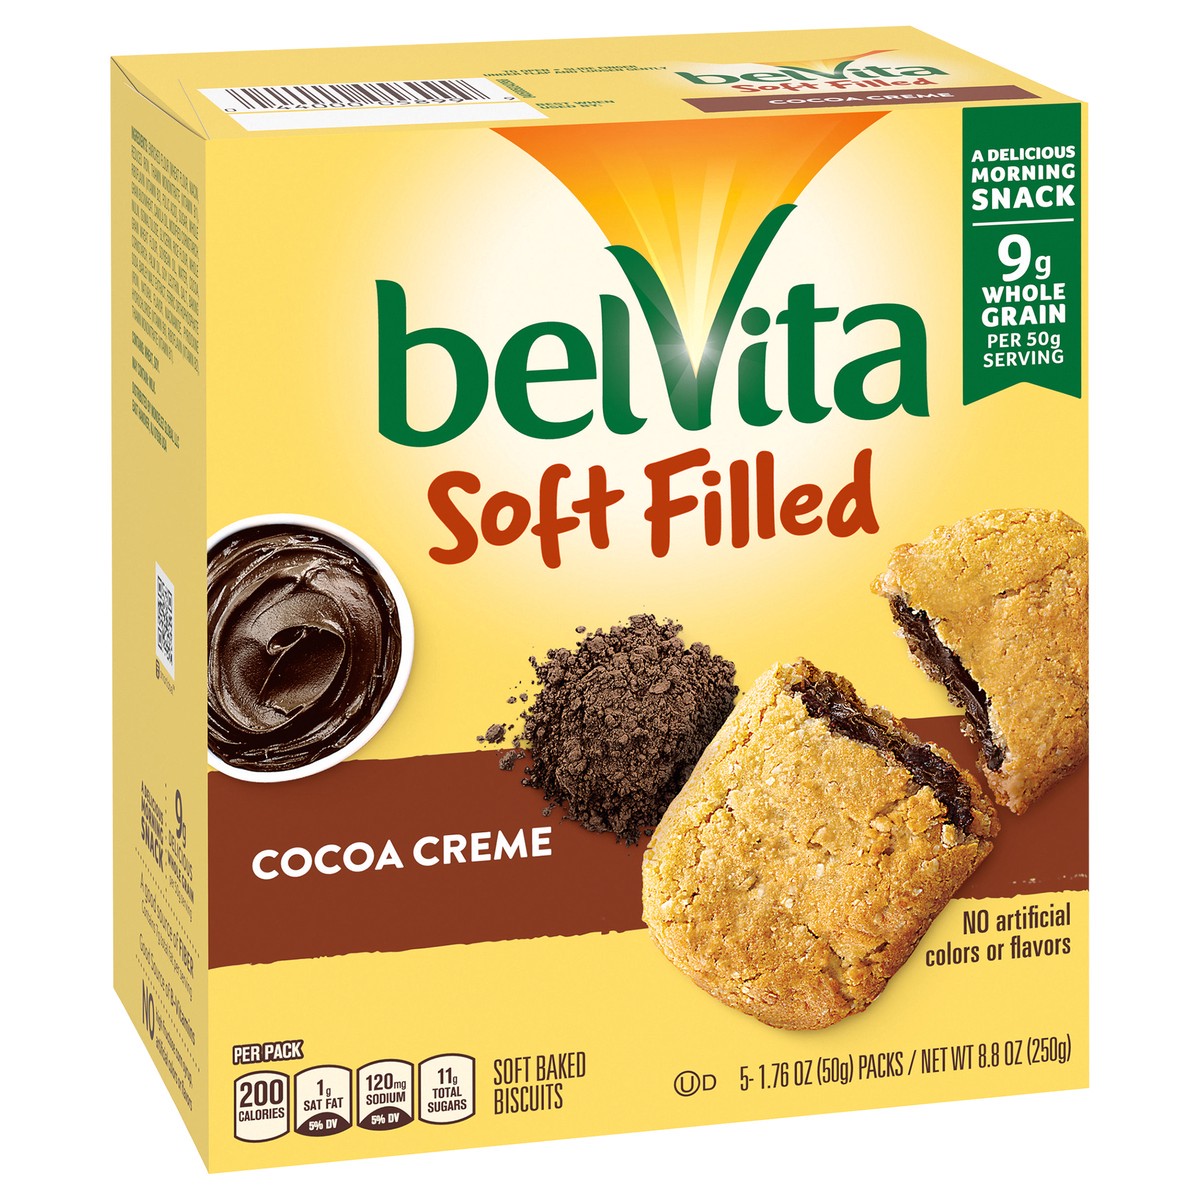 slide 9 of 9, belVita Nabisco belVita Belvita Soft Filled Cocoa Creme Soft Baked Biscuits 5-1.76 Oz. Packs, 8.8 oz